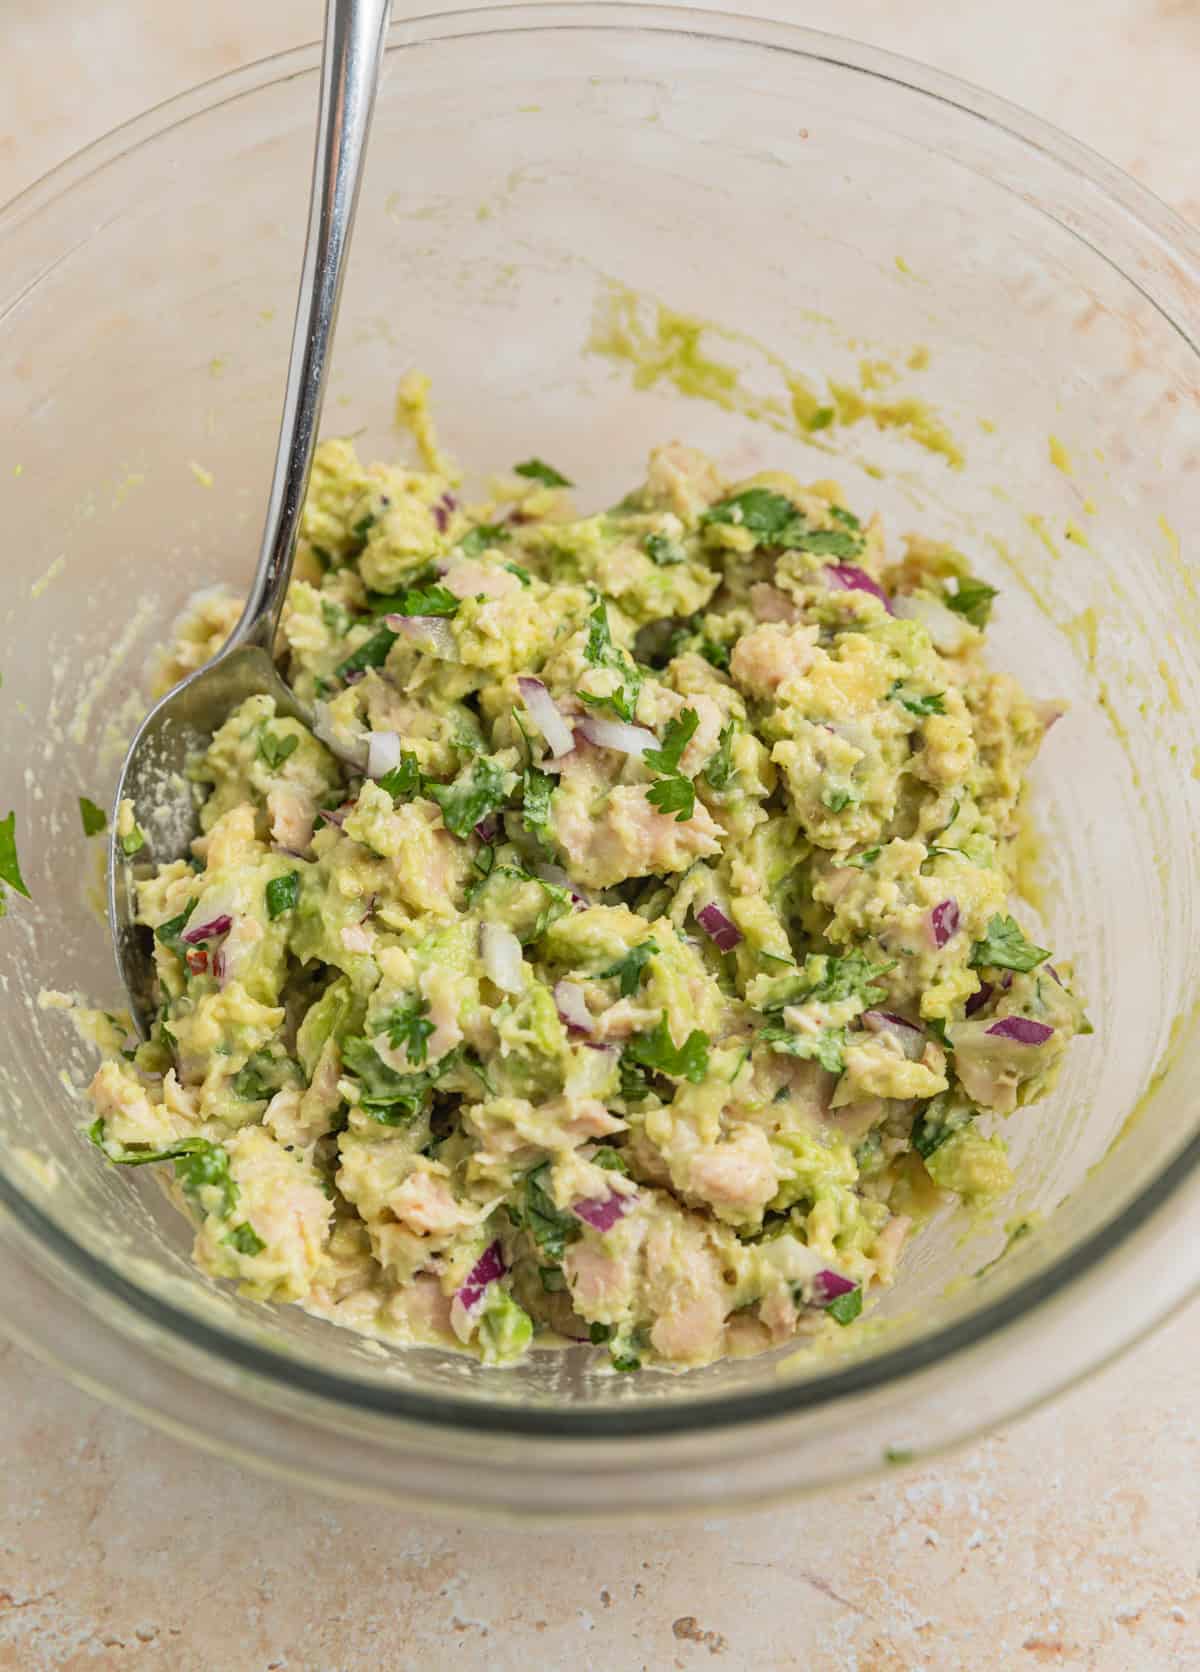 Avocado tuna salad mixed in bowl with spoon.